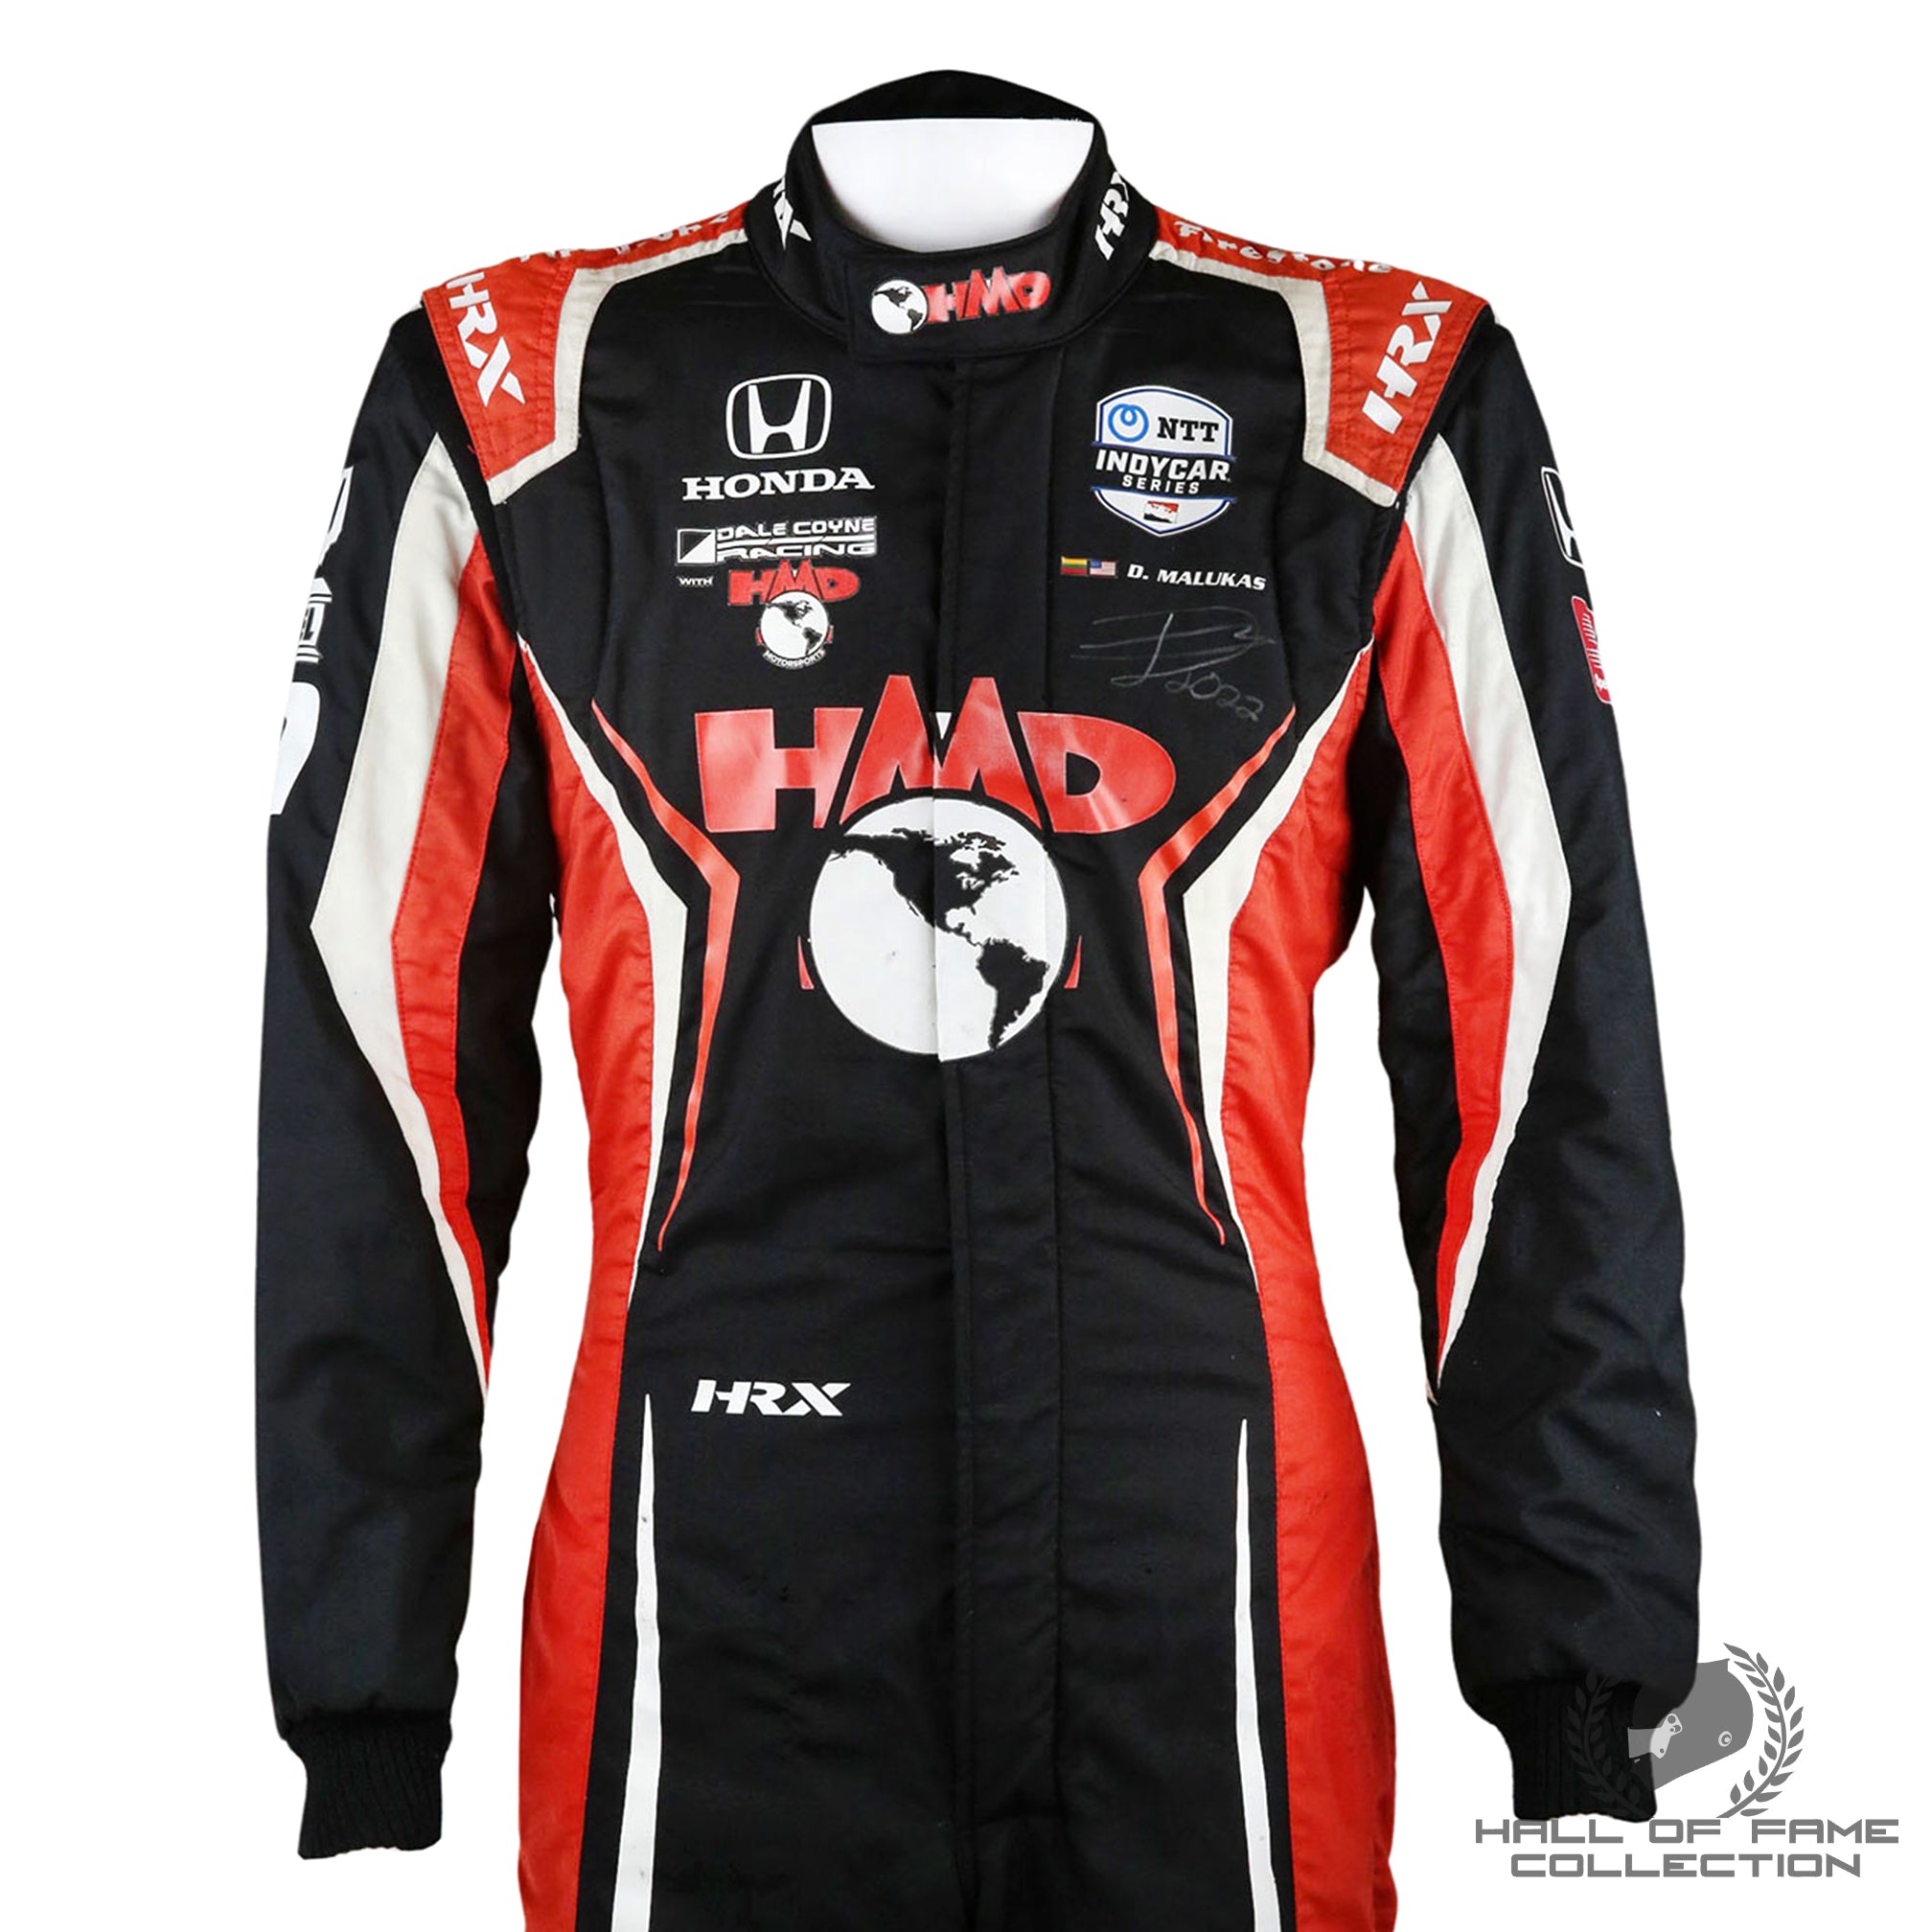 2022 David Malukas Signed Race Used Dale Coyne IndyCar Suit